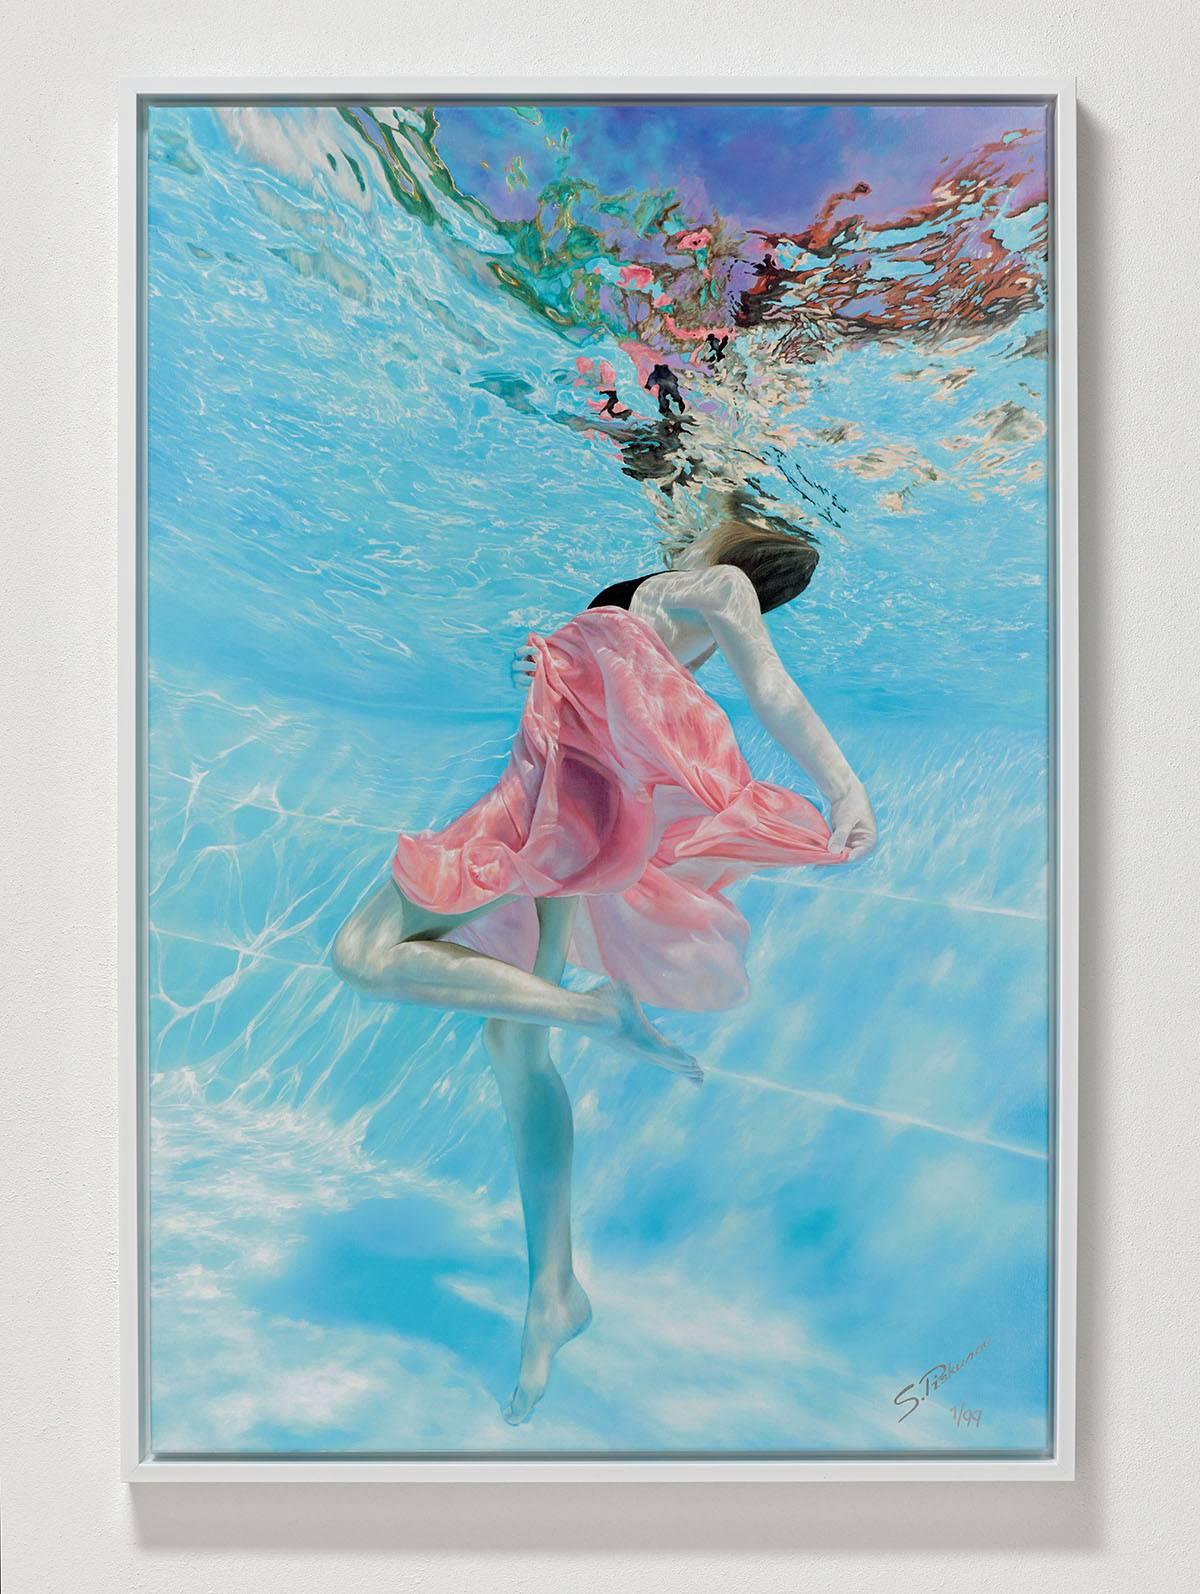 Girl in pink - Framed Fine Art Limited Edition of 99 - Print by Sergey Piskunov